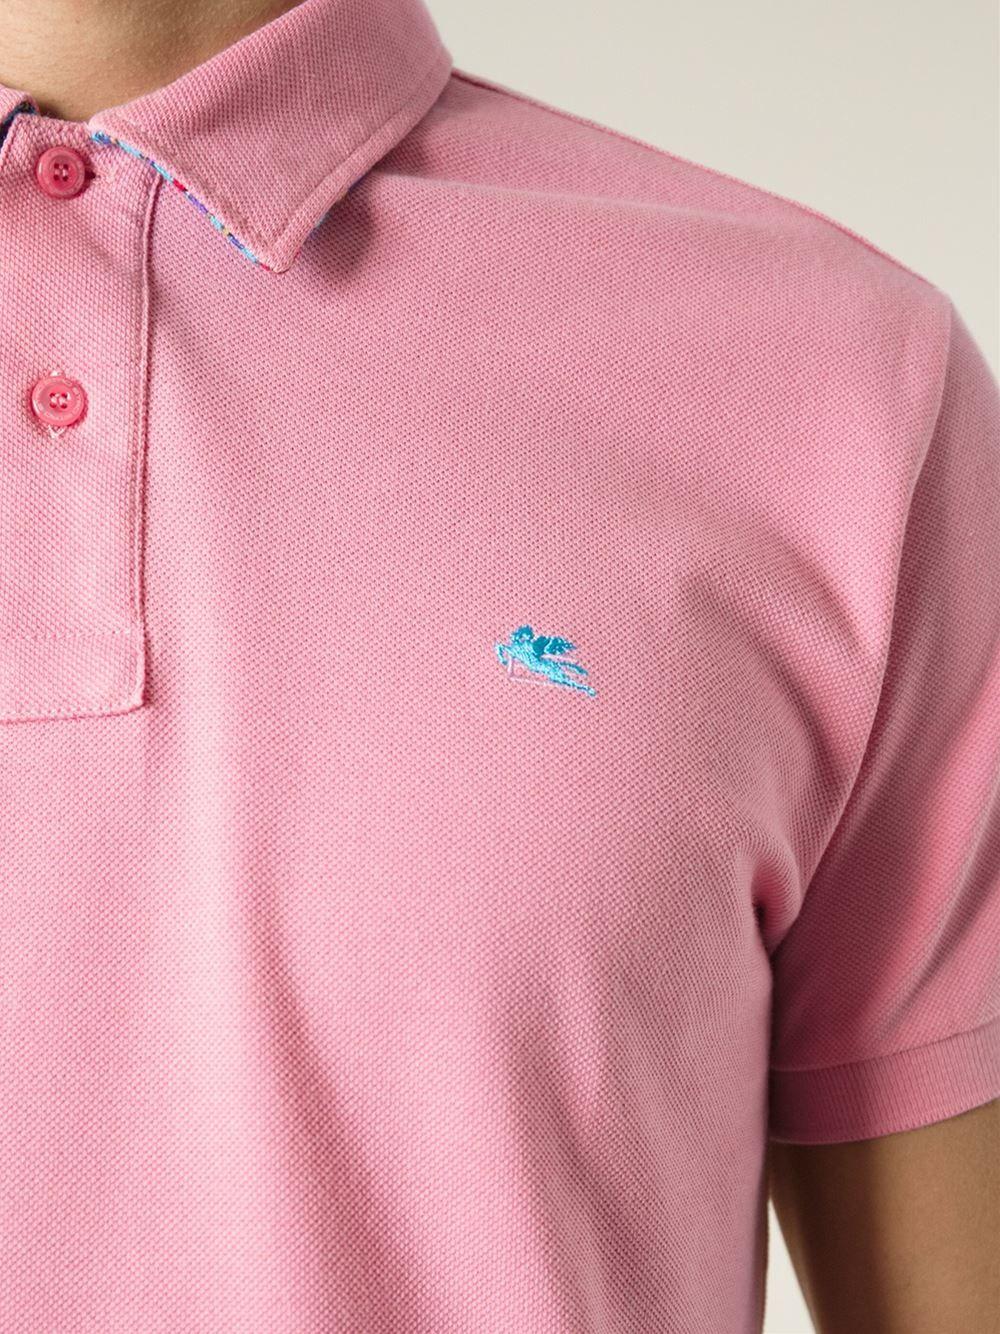 Etro Logo - Etro Logo Embroidered Polo Shirt In Pink For Men